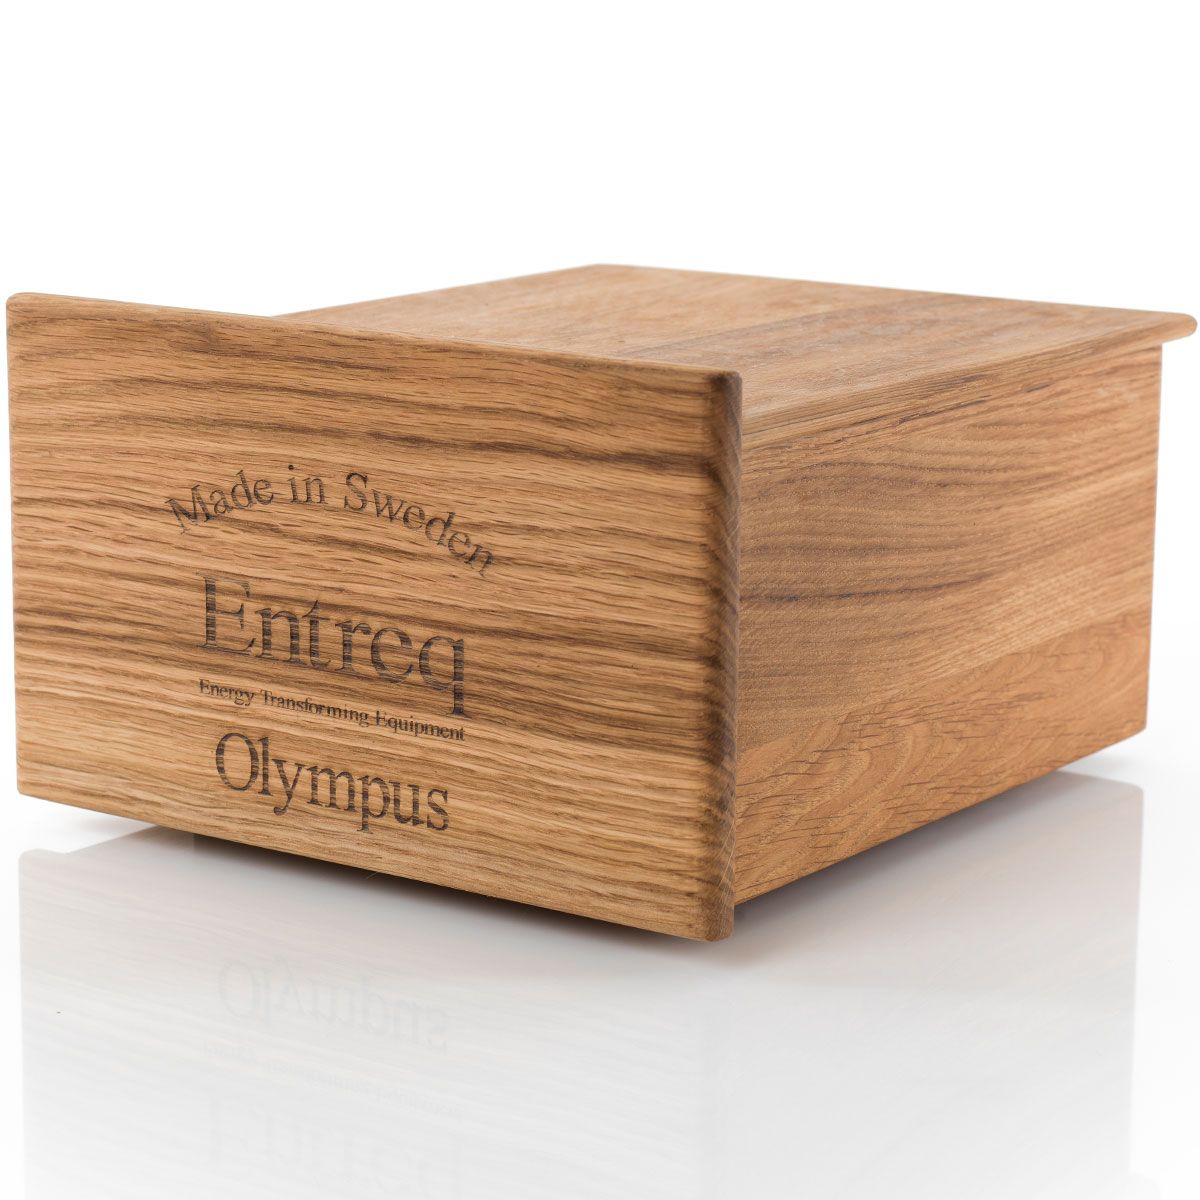 Entreq Olympus Minimus Grounding Box